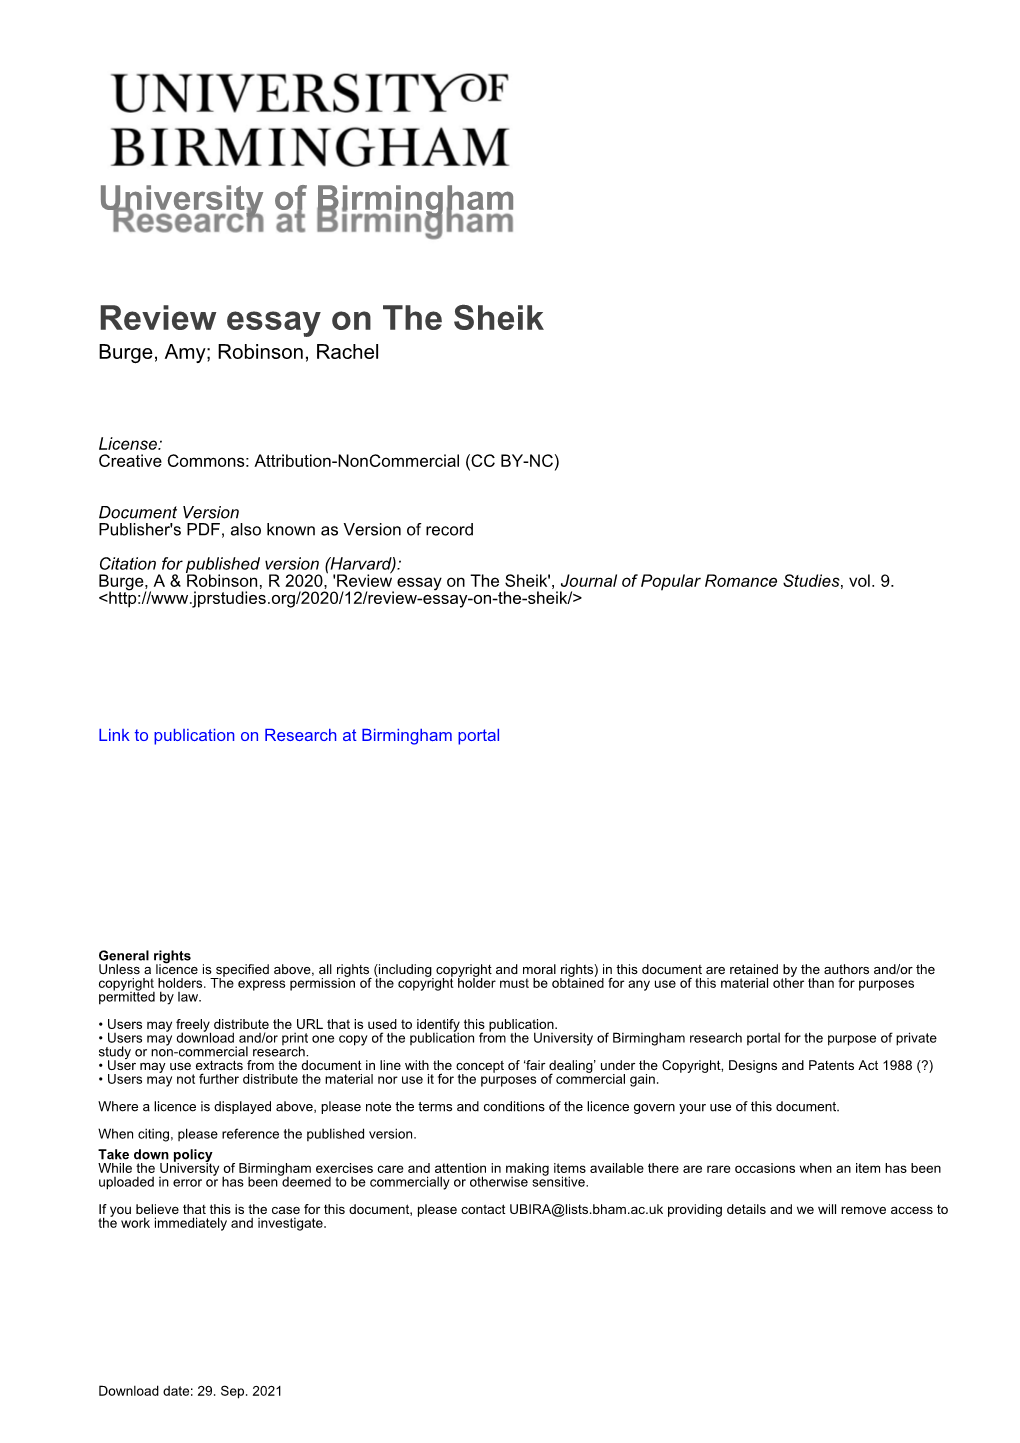 University of Birmingham Review Essay on the Sheik